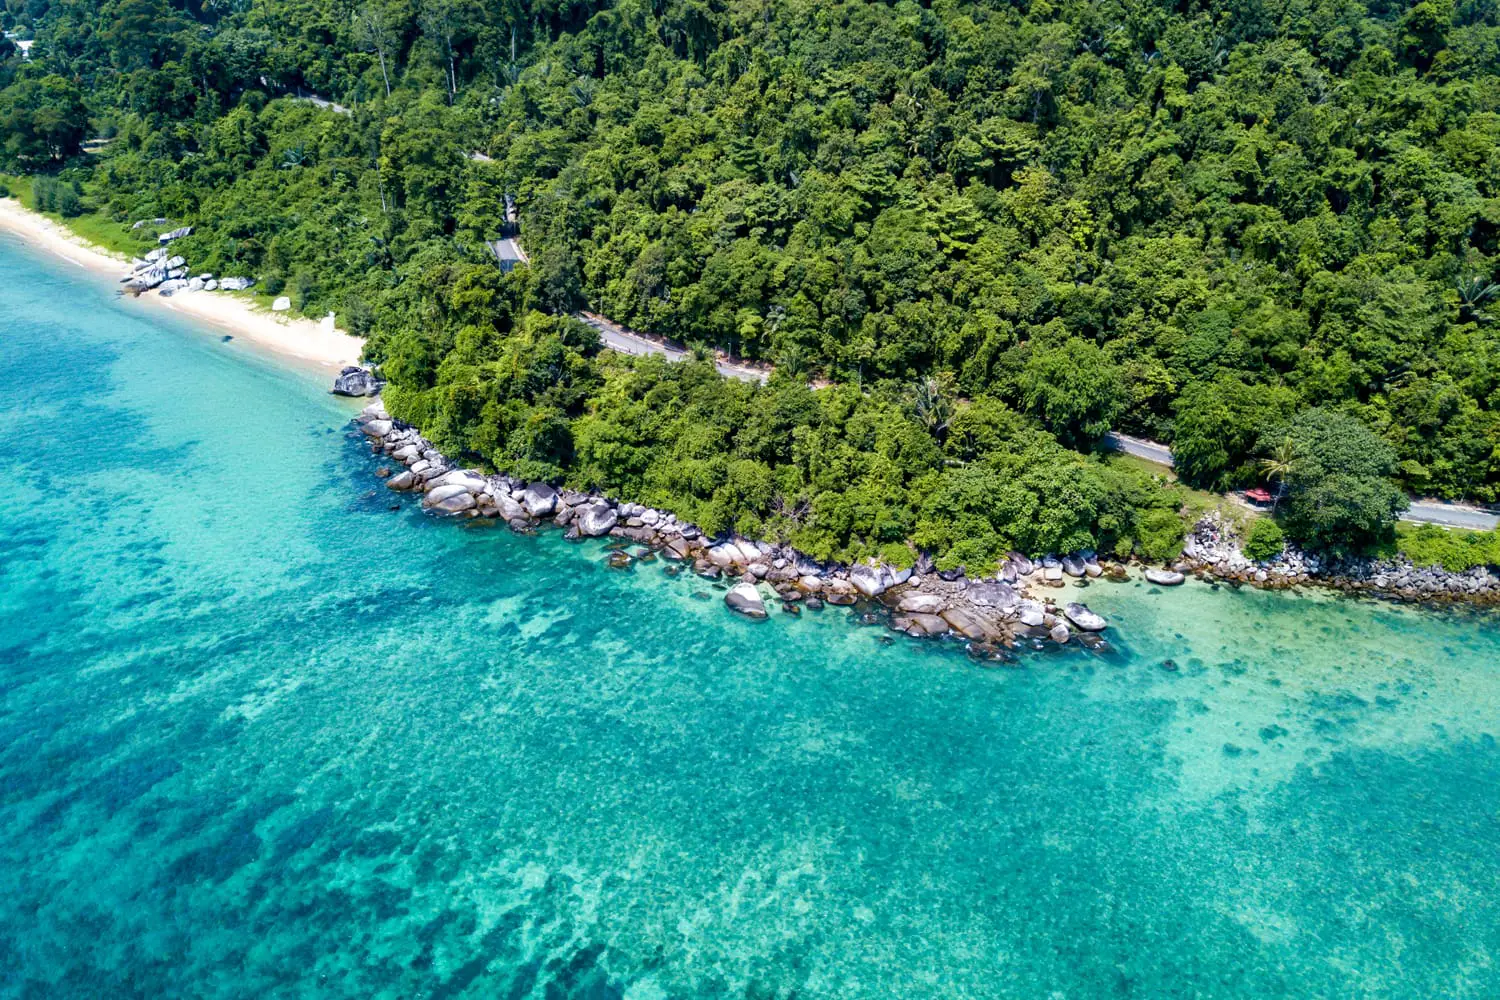 Pulau Tioman in Malaysia seen from a drone